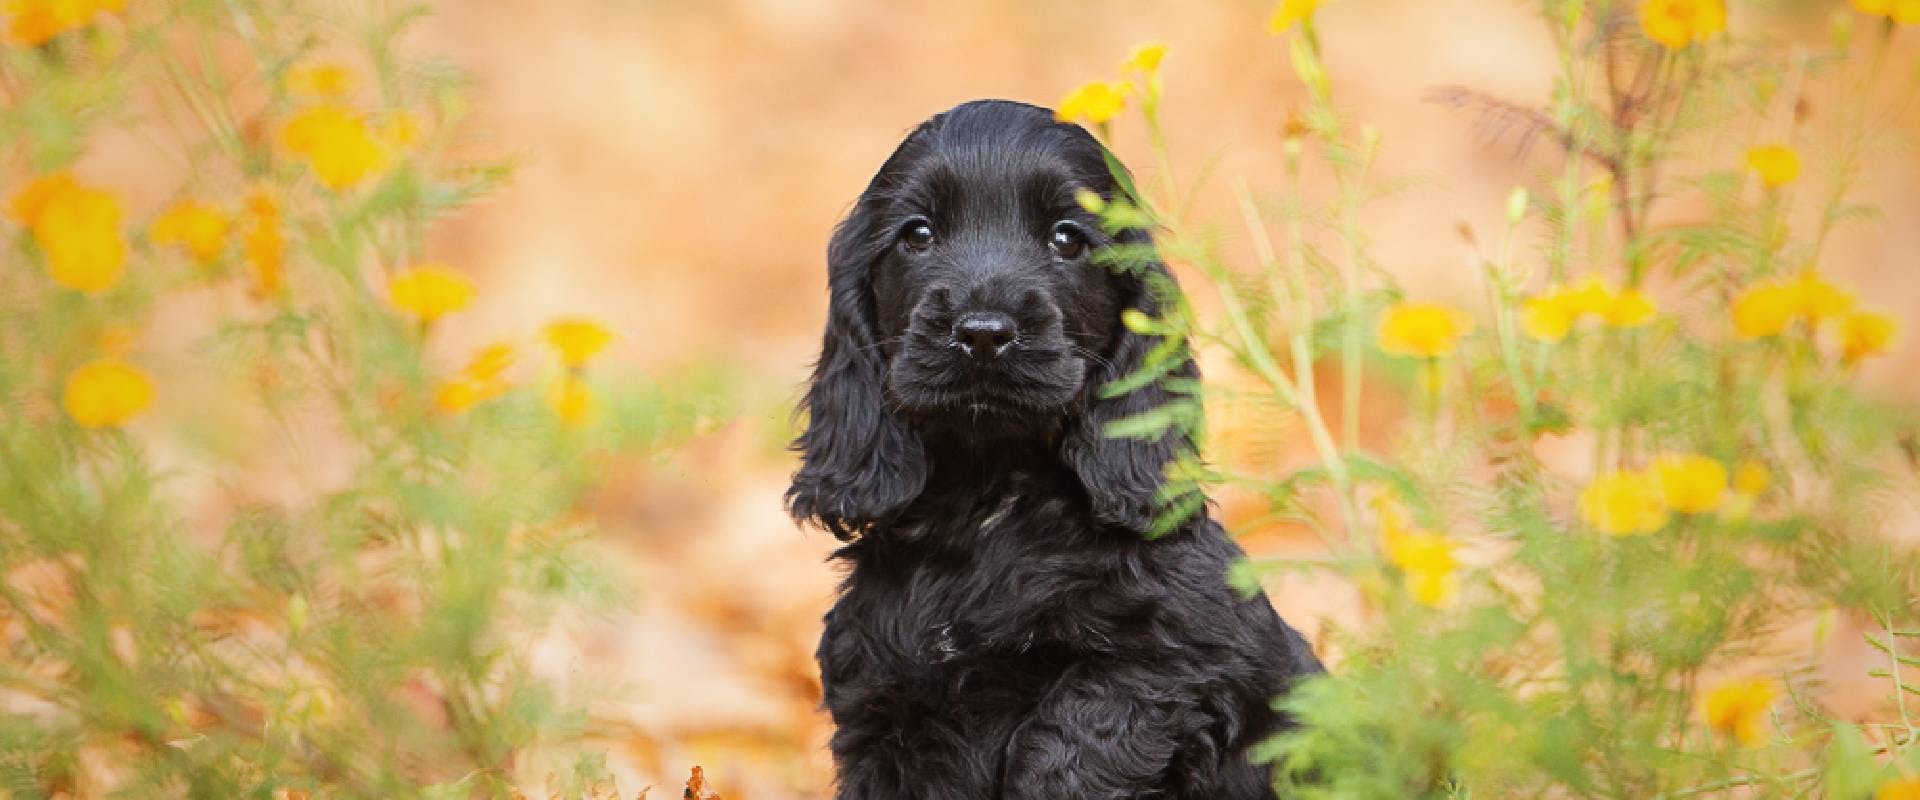 A black english cocker spaniel puppy in a field